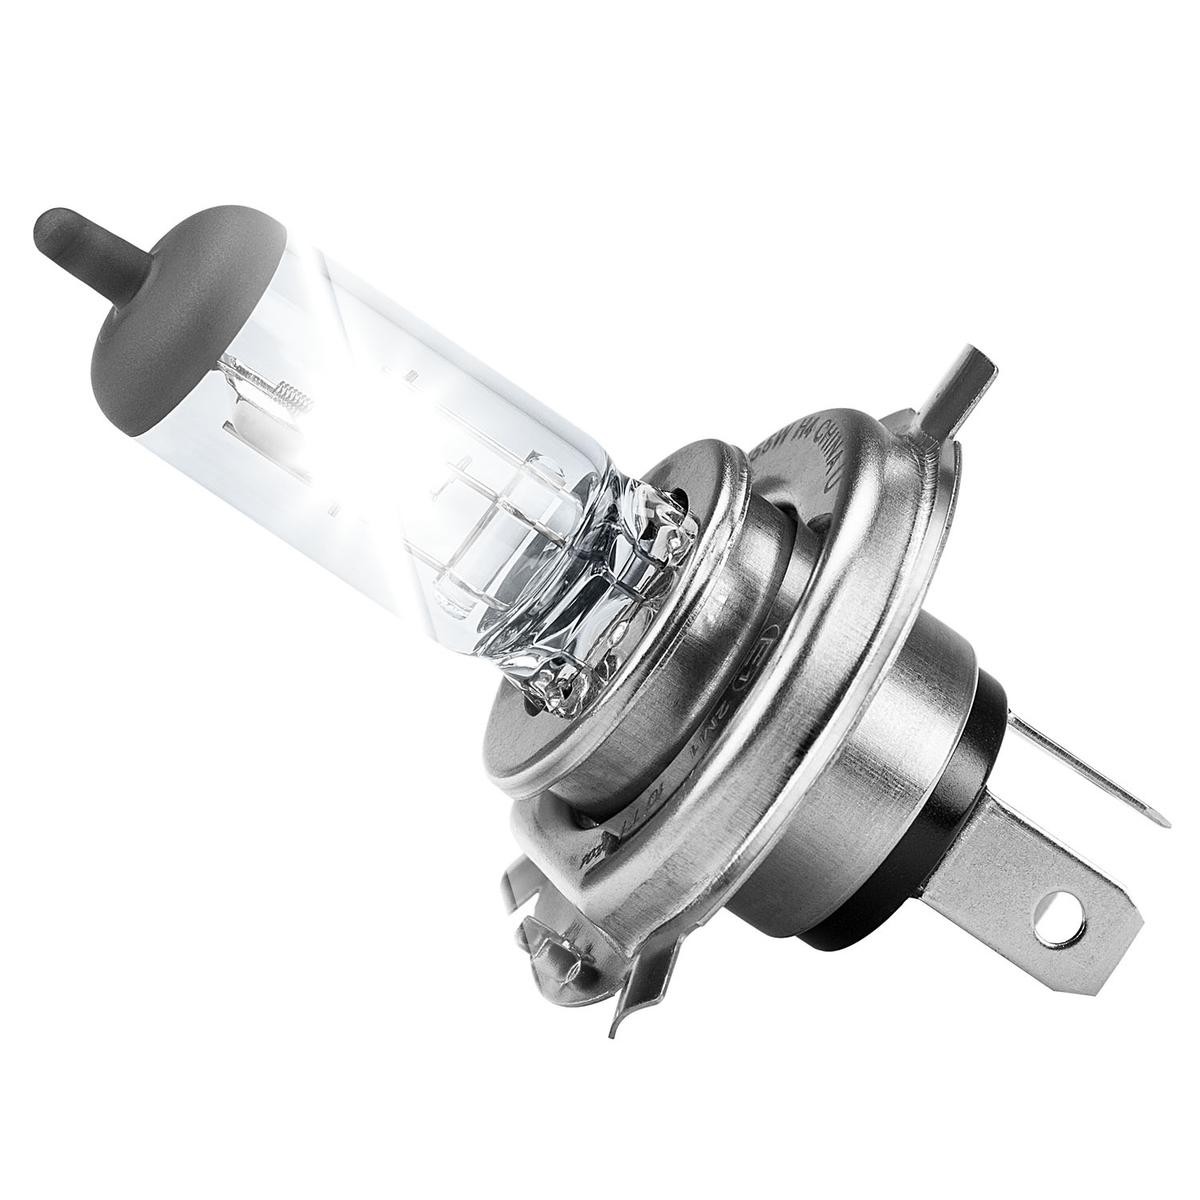 Cartechnic H4-Lampe 24V, 2,99 €